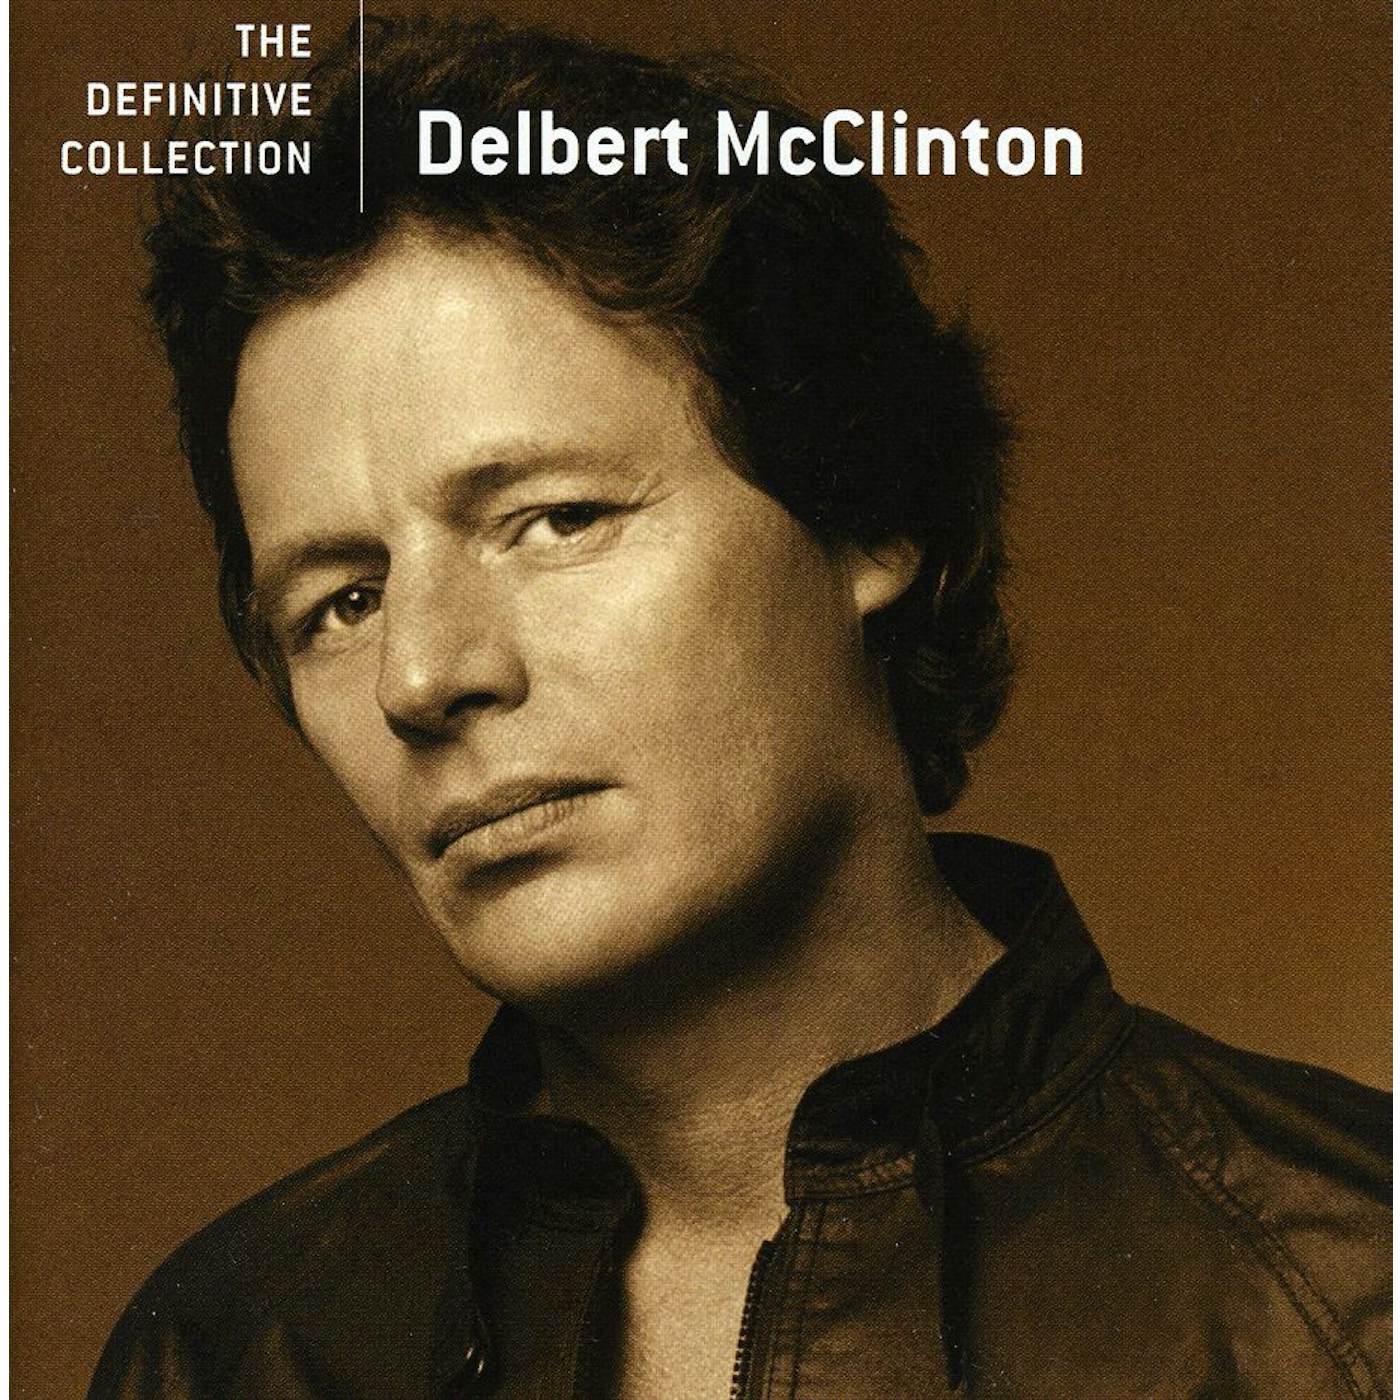 Delbert McClinton DEFINITIVE COLLECTION CD